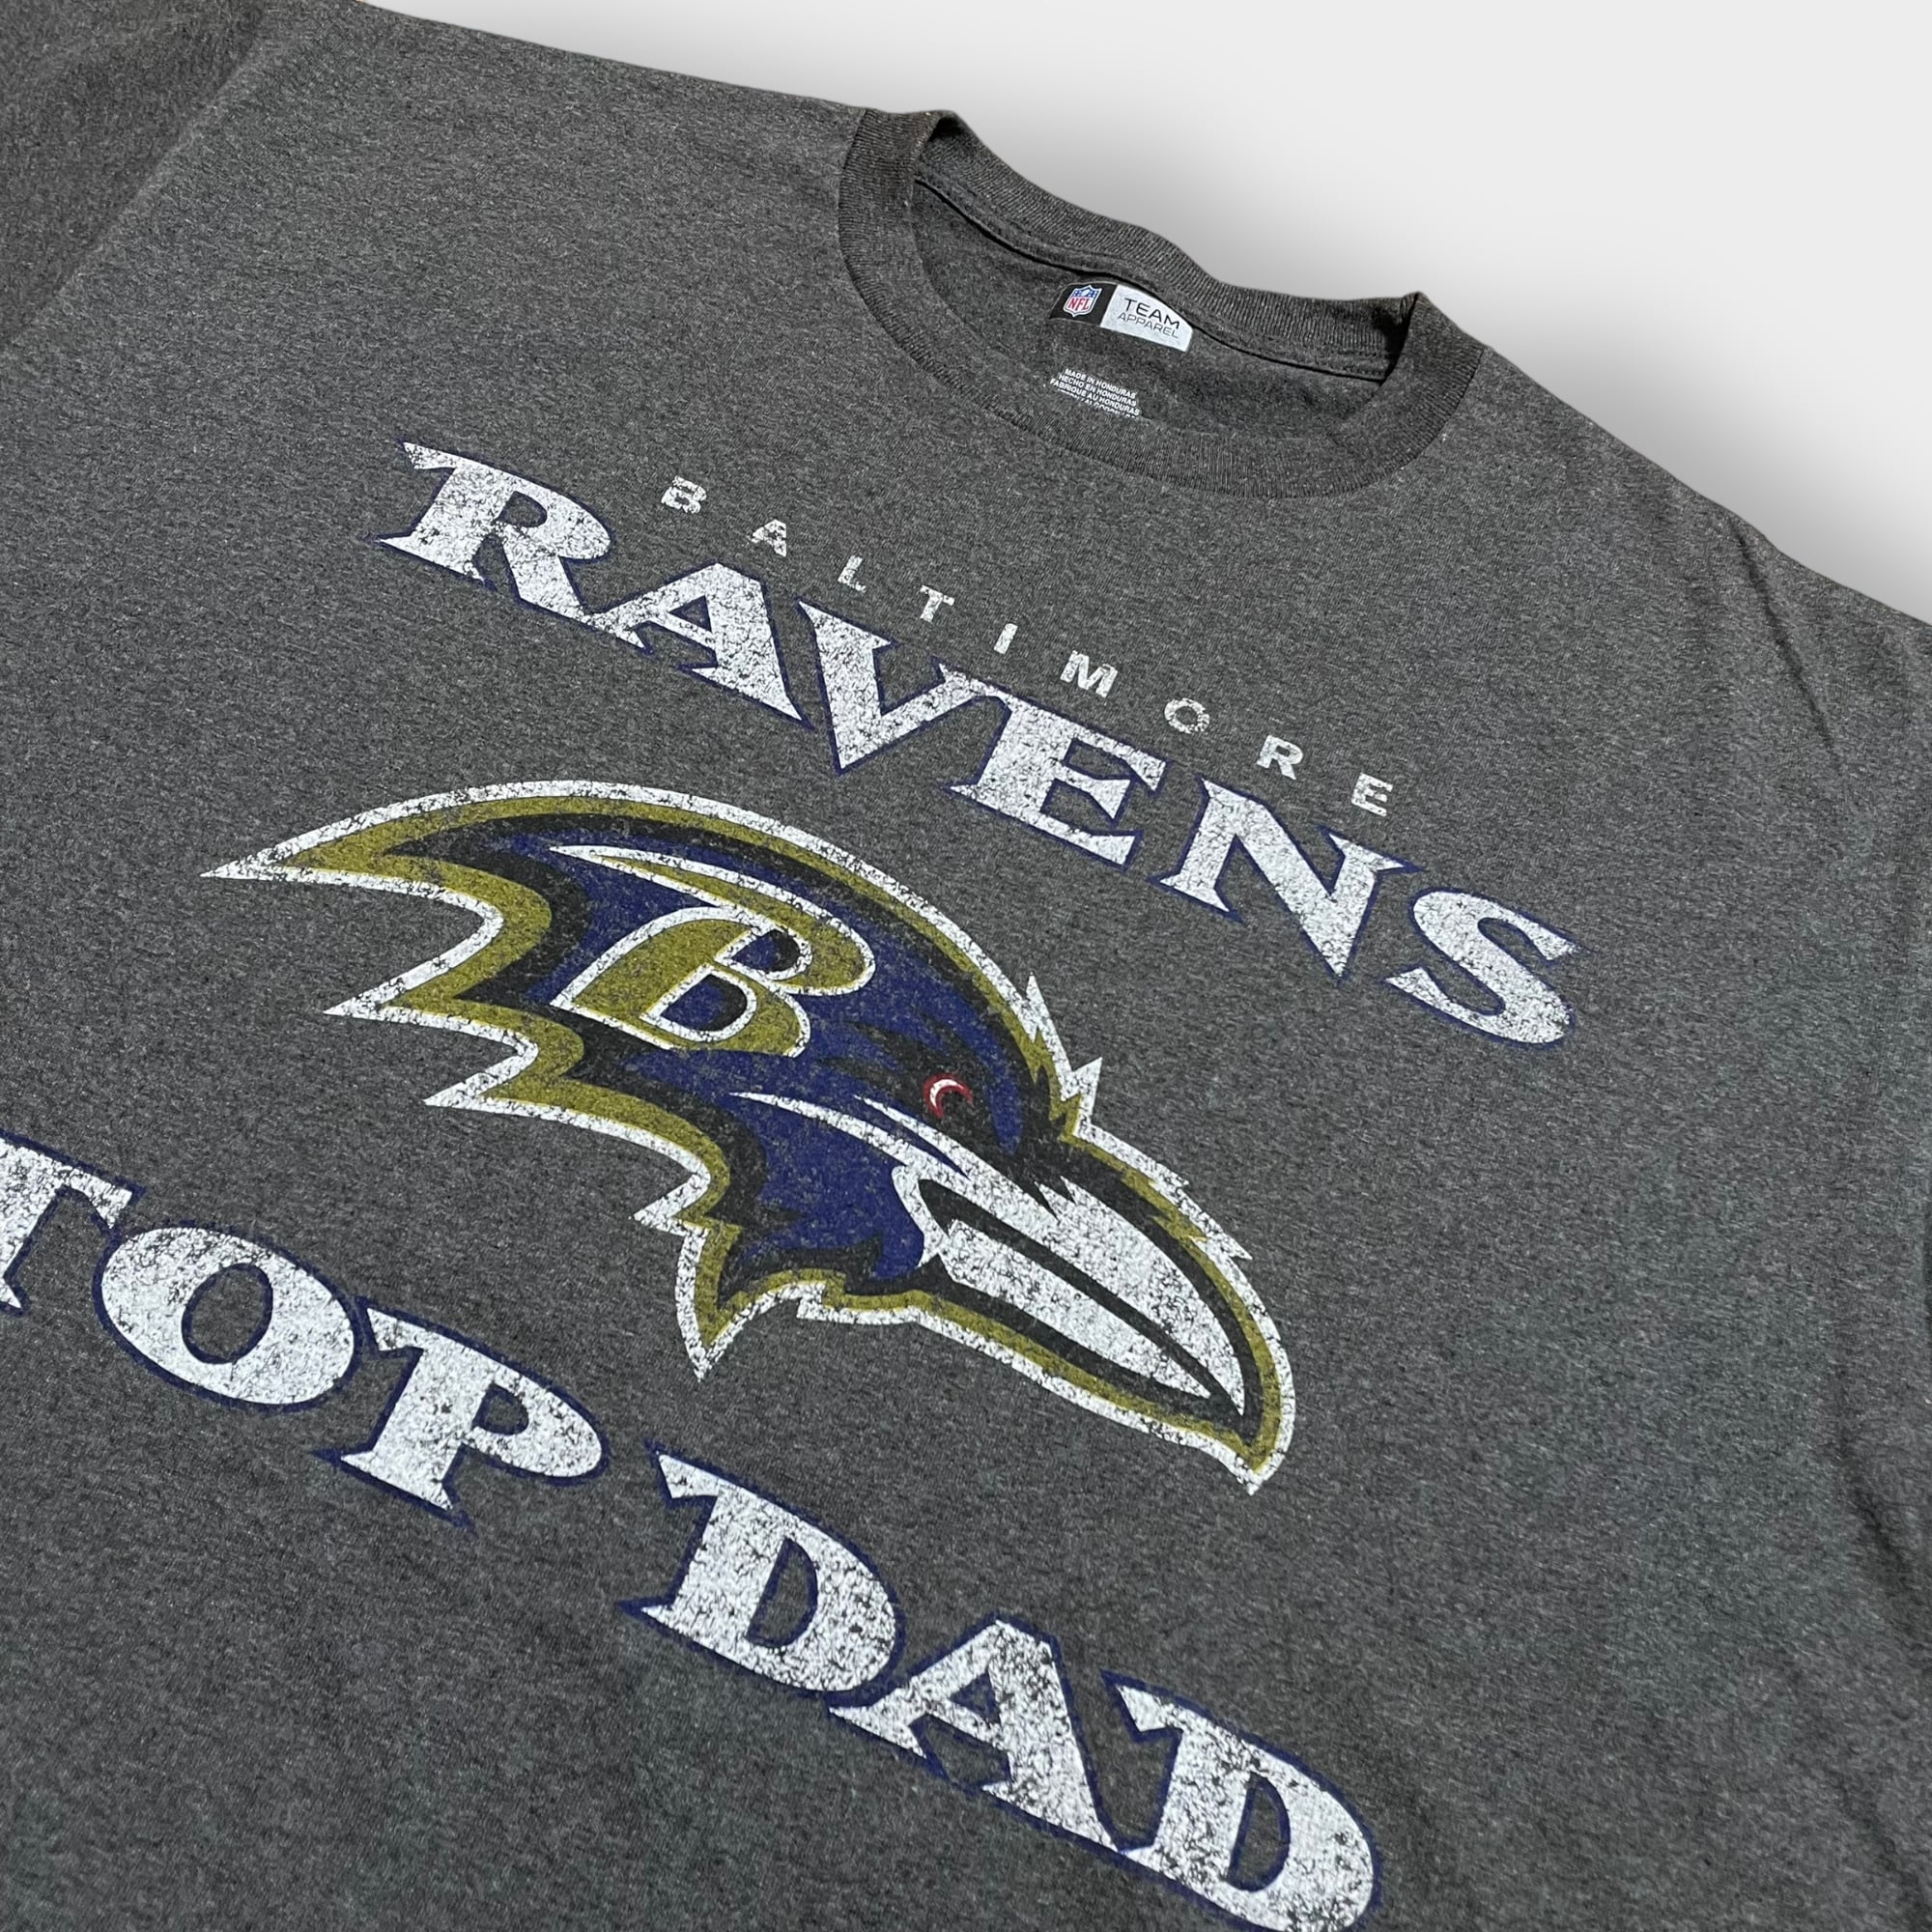 NFL TEAM APPAREL】Baltimore Ravens ボルチモアレイブンズ Tシャツ